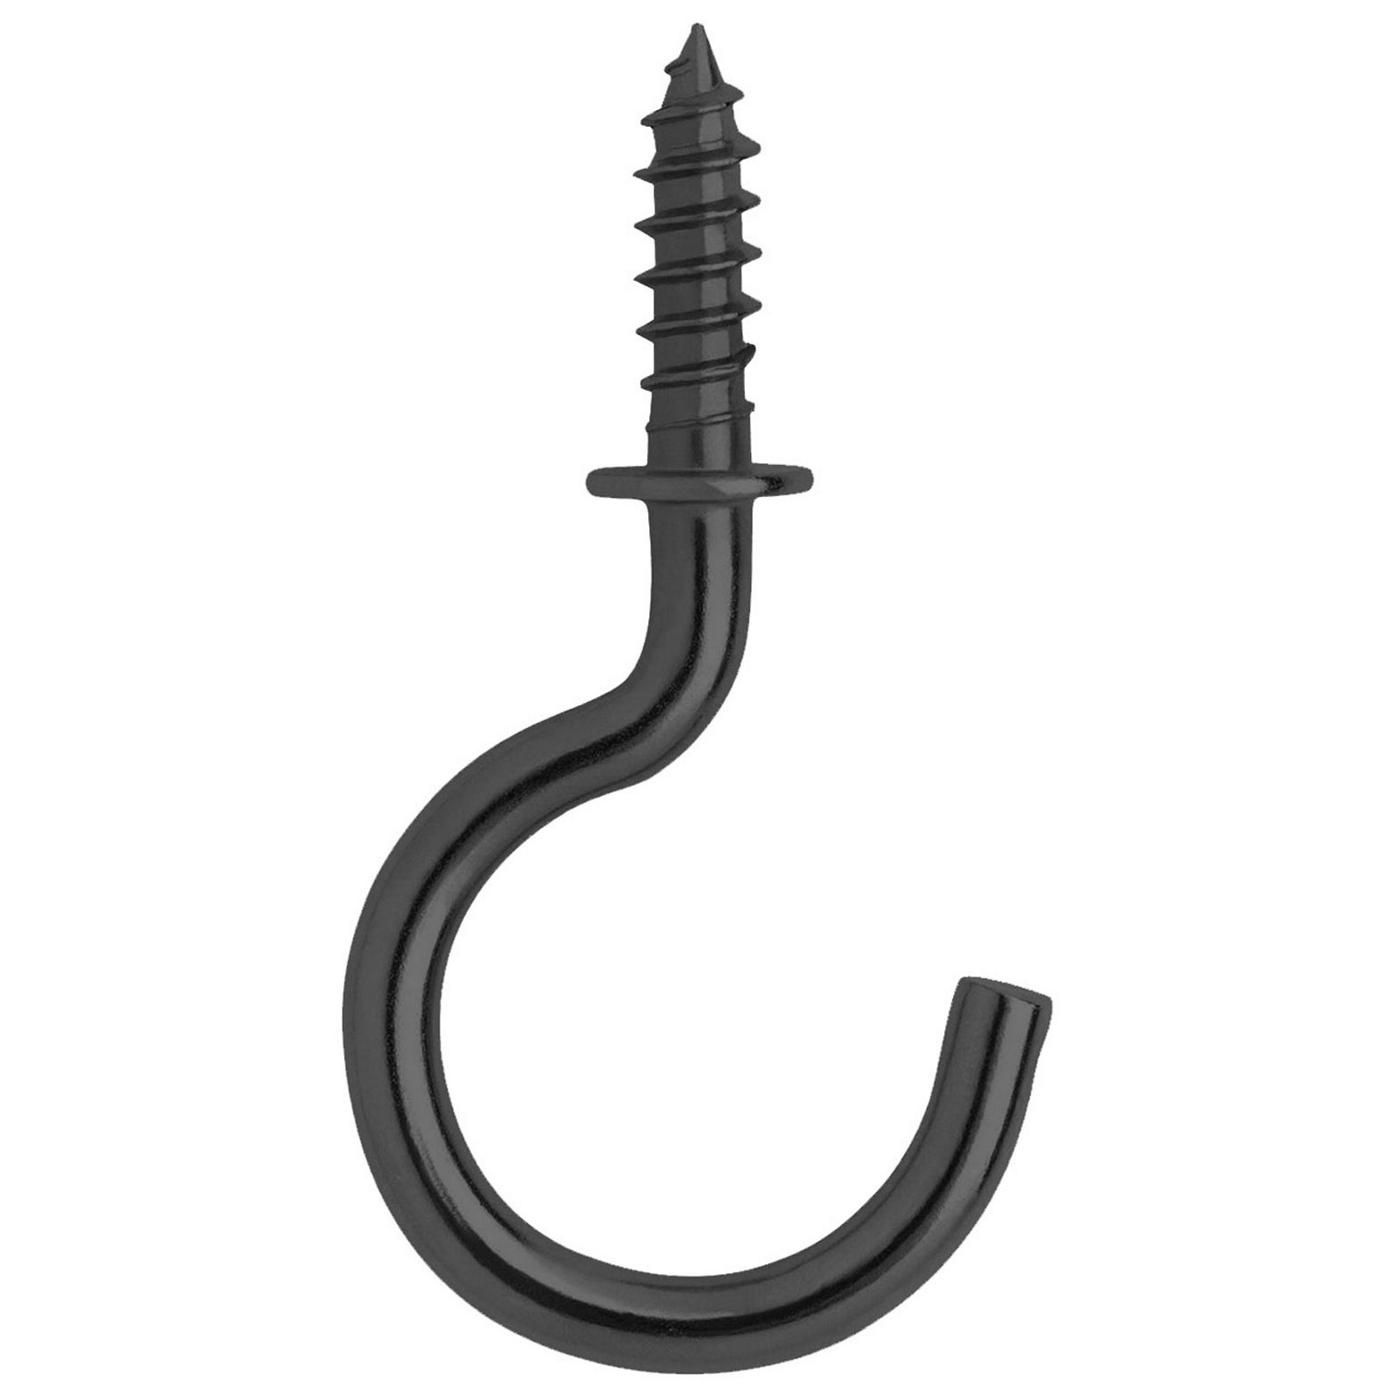 Stainless Steel Screw Hooks, Eye Hook Screws M5 2.5” Screw in Eye Hooks  Heavy Duty Metal Ceiling Outdoor Hooks Screw Hanger Open Loop Hanger Hooks